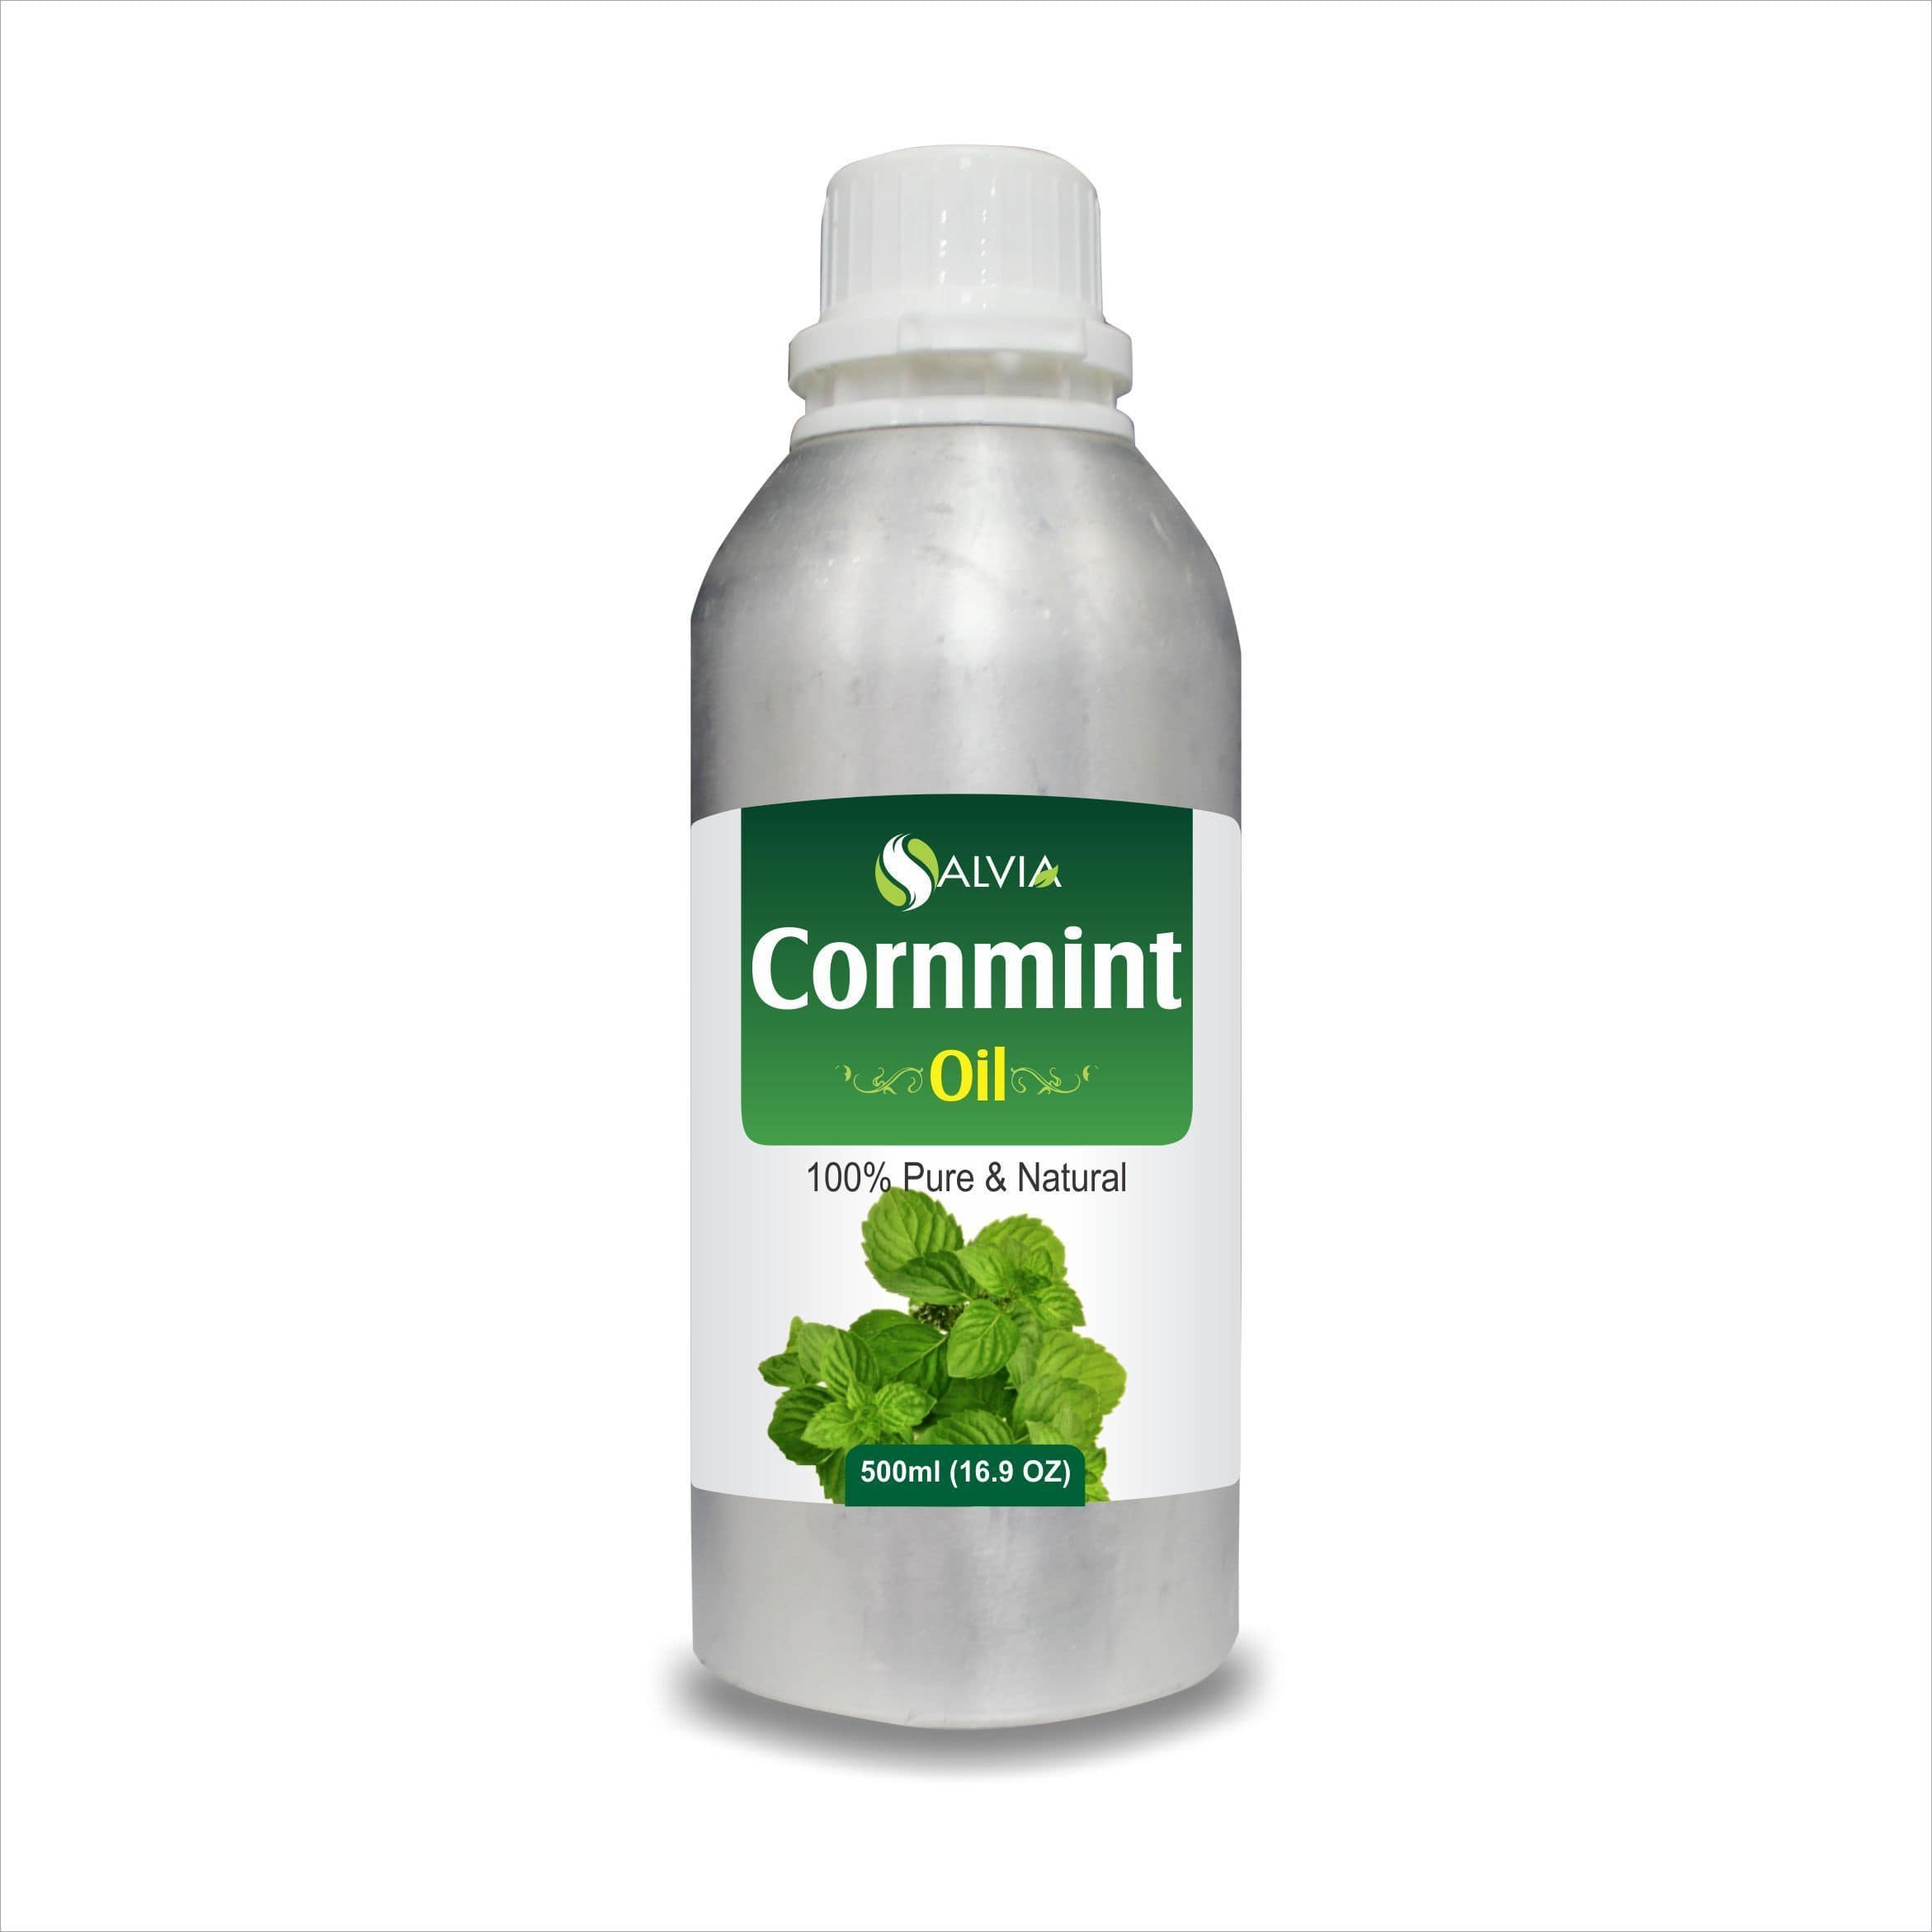 cornmint oil uses